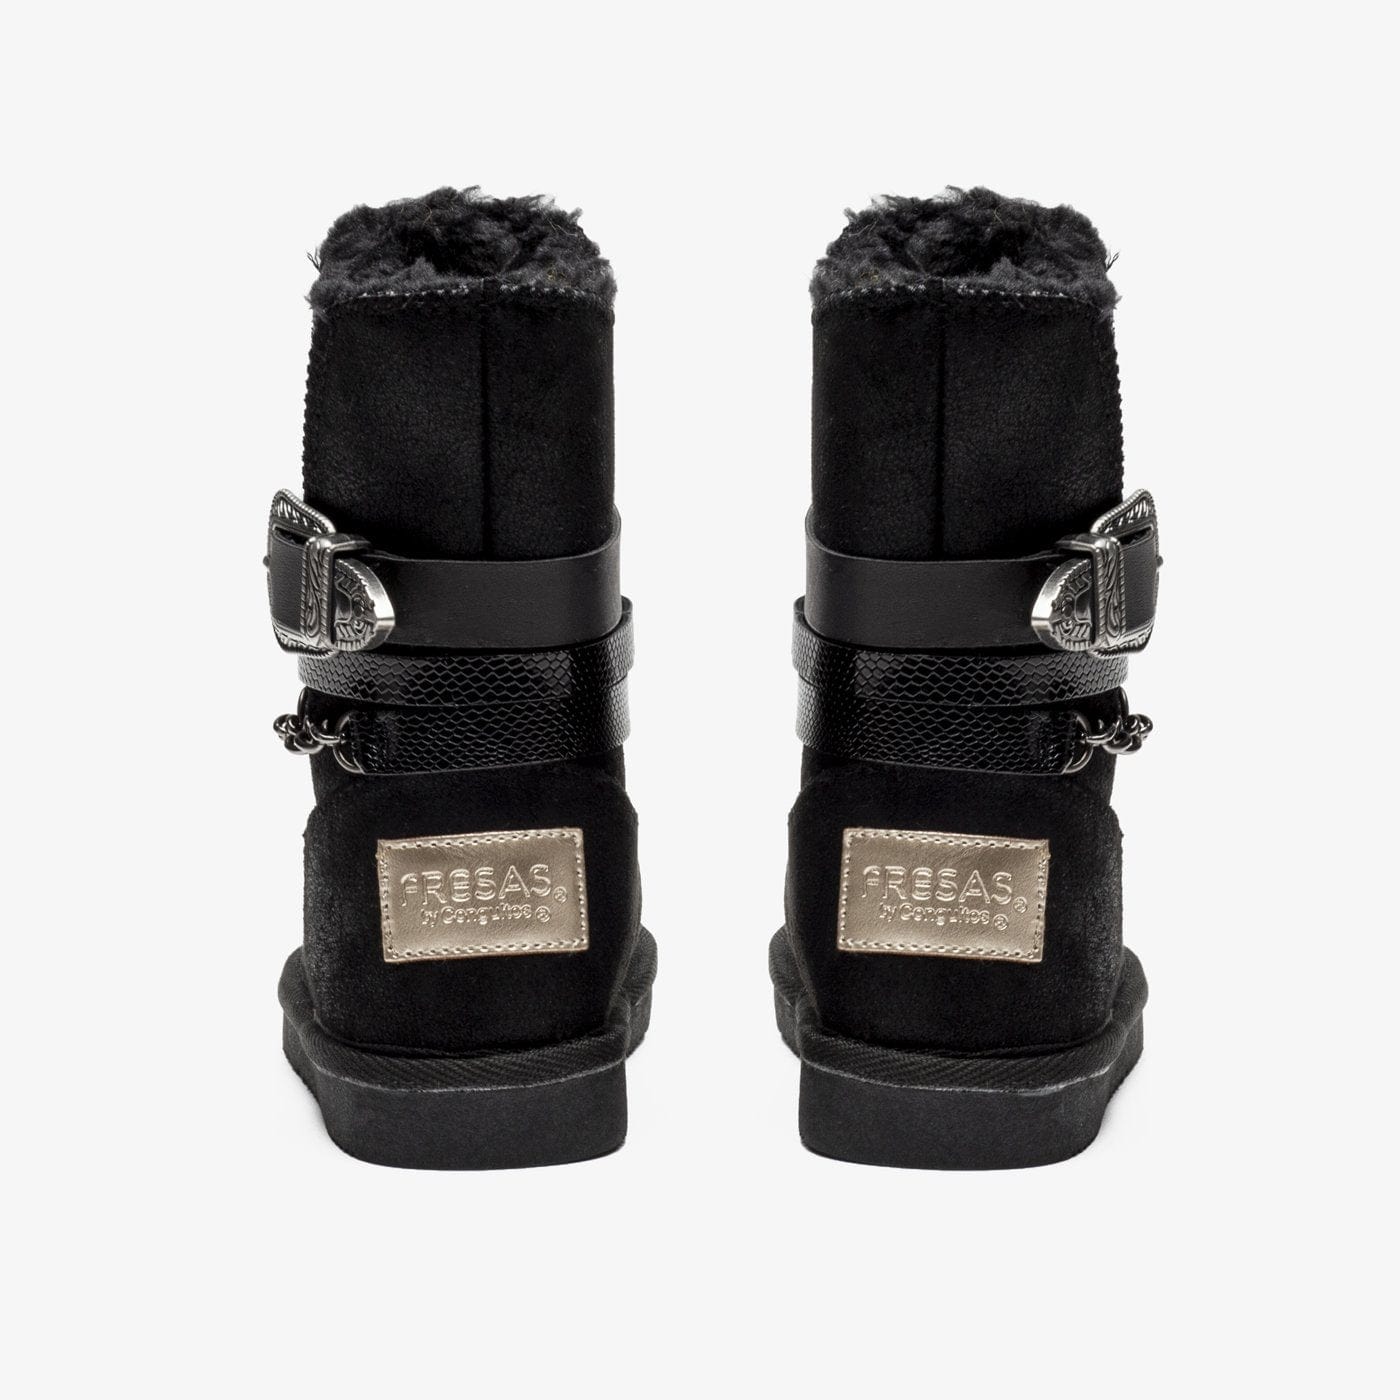 FRESAS CON NATA Shoes Girl's Black Buckle Australian Boots